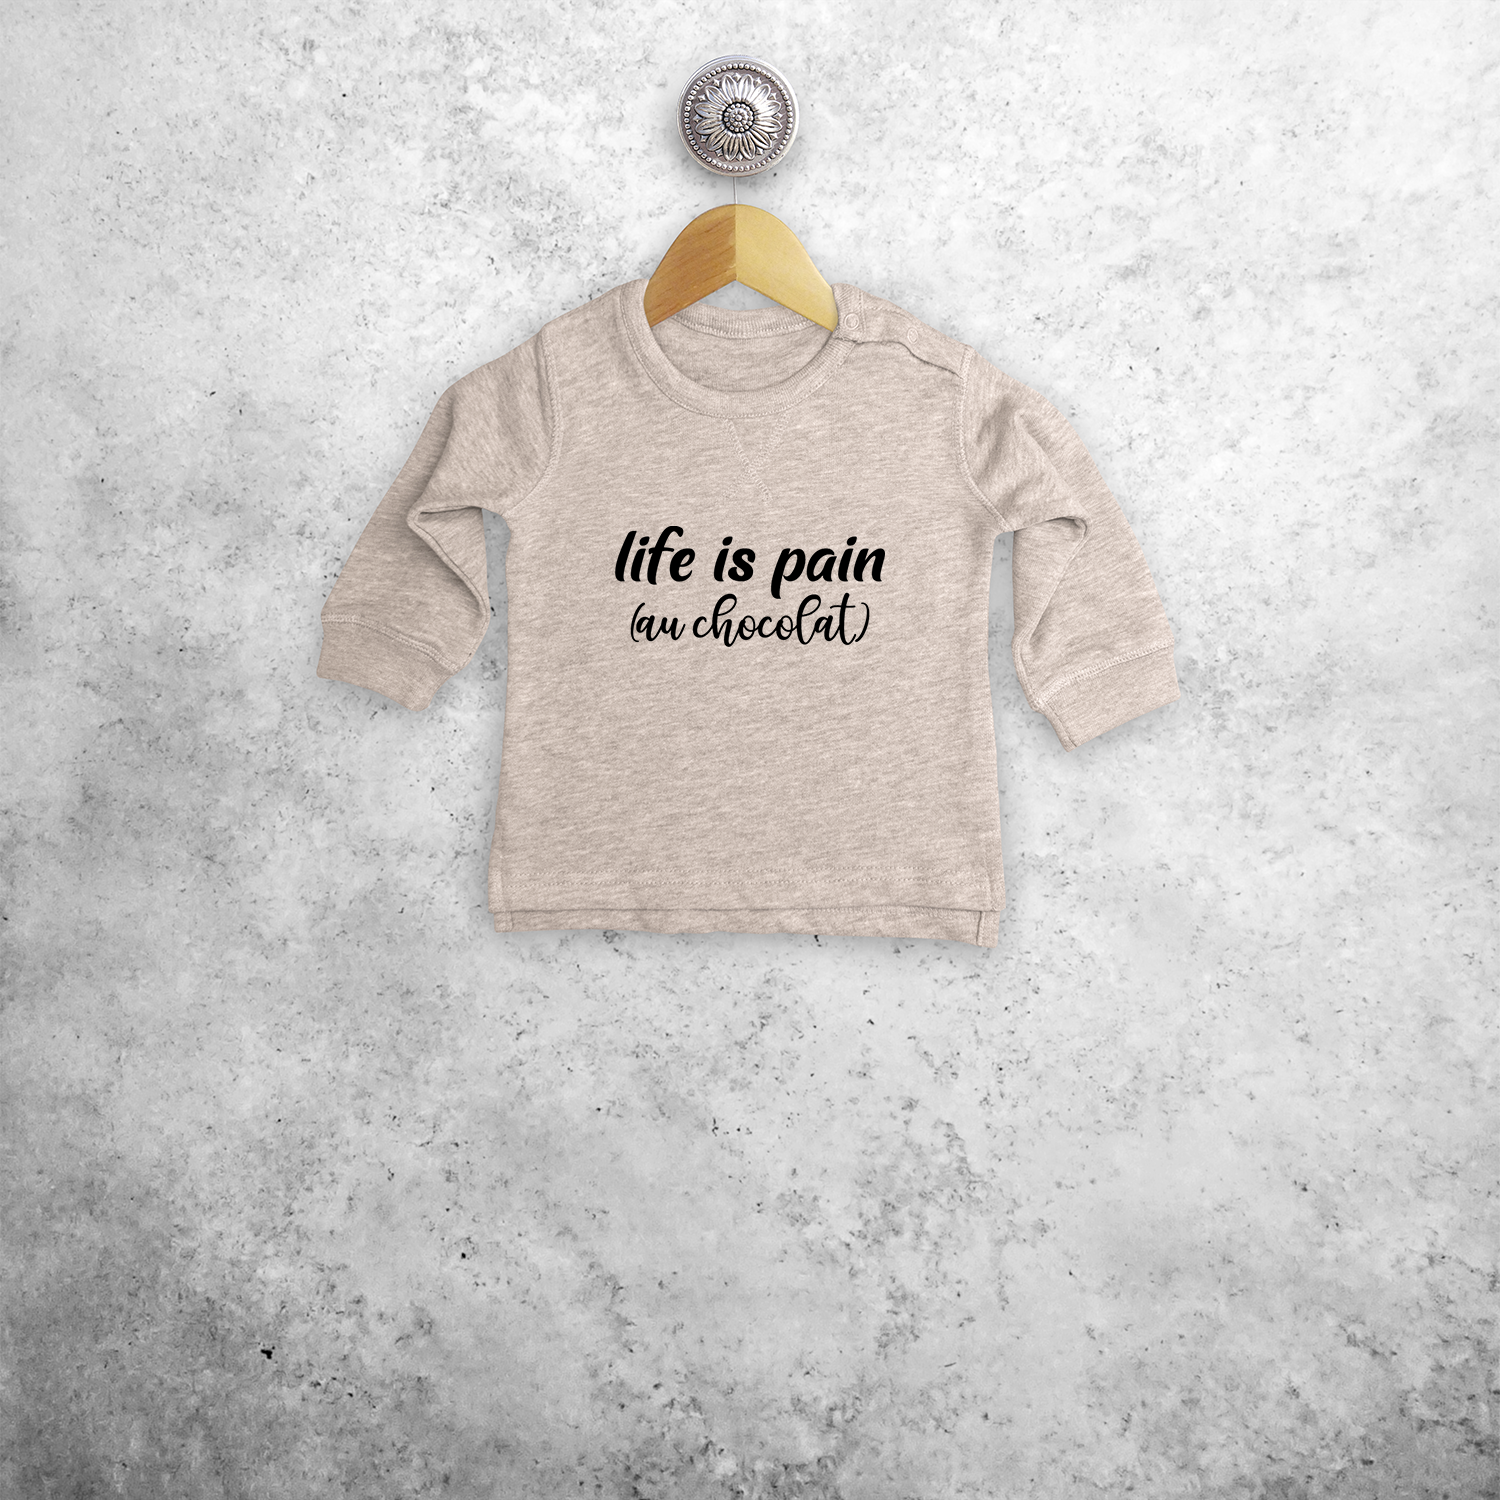 'Life is pain (au chocolat)' baby sweater